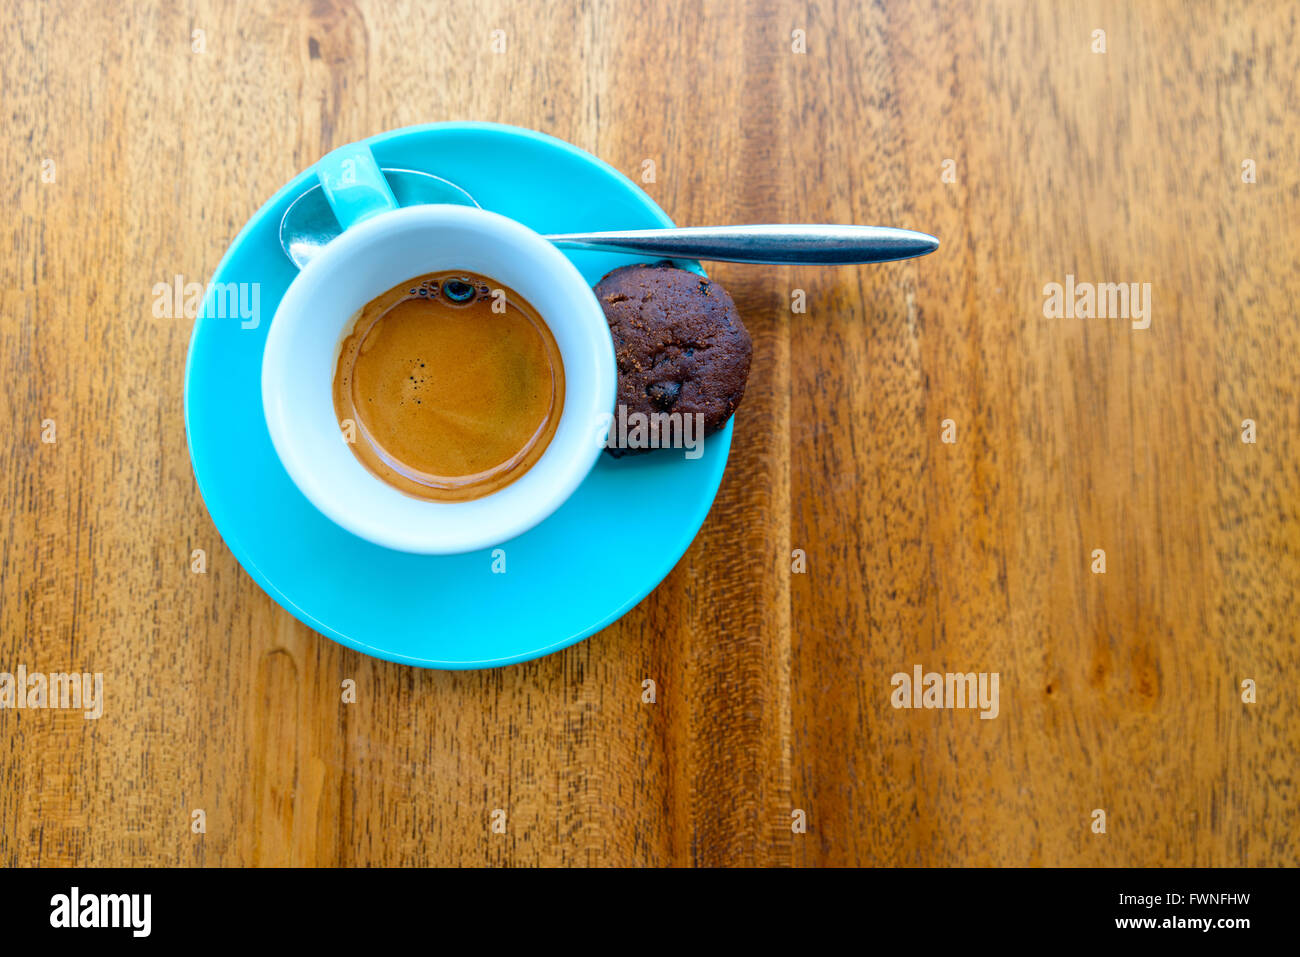 Un espresso en una taza turquesa sobre una tabla de madera Foto de stock